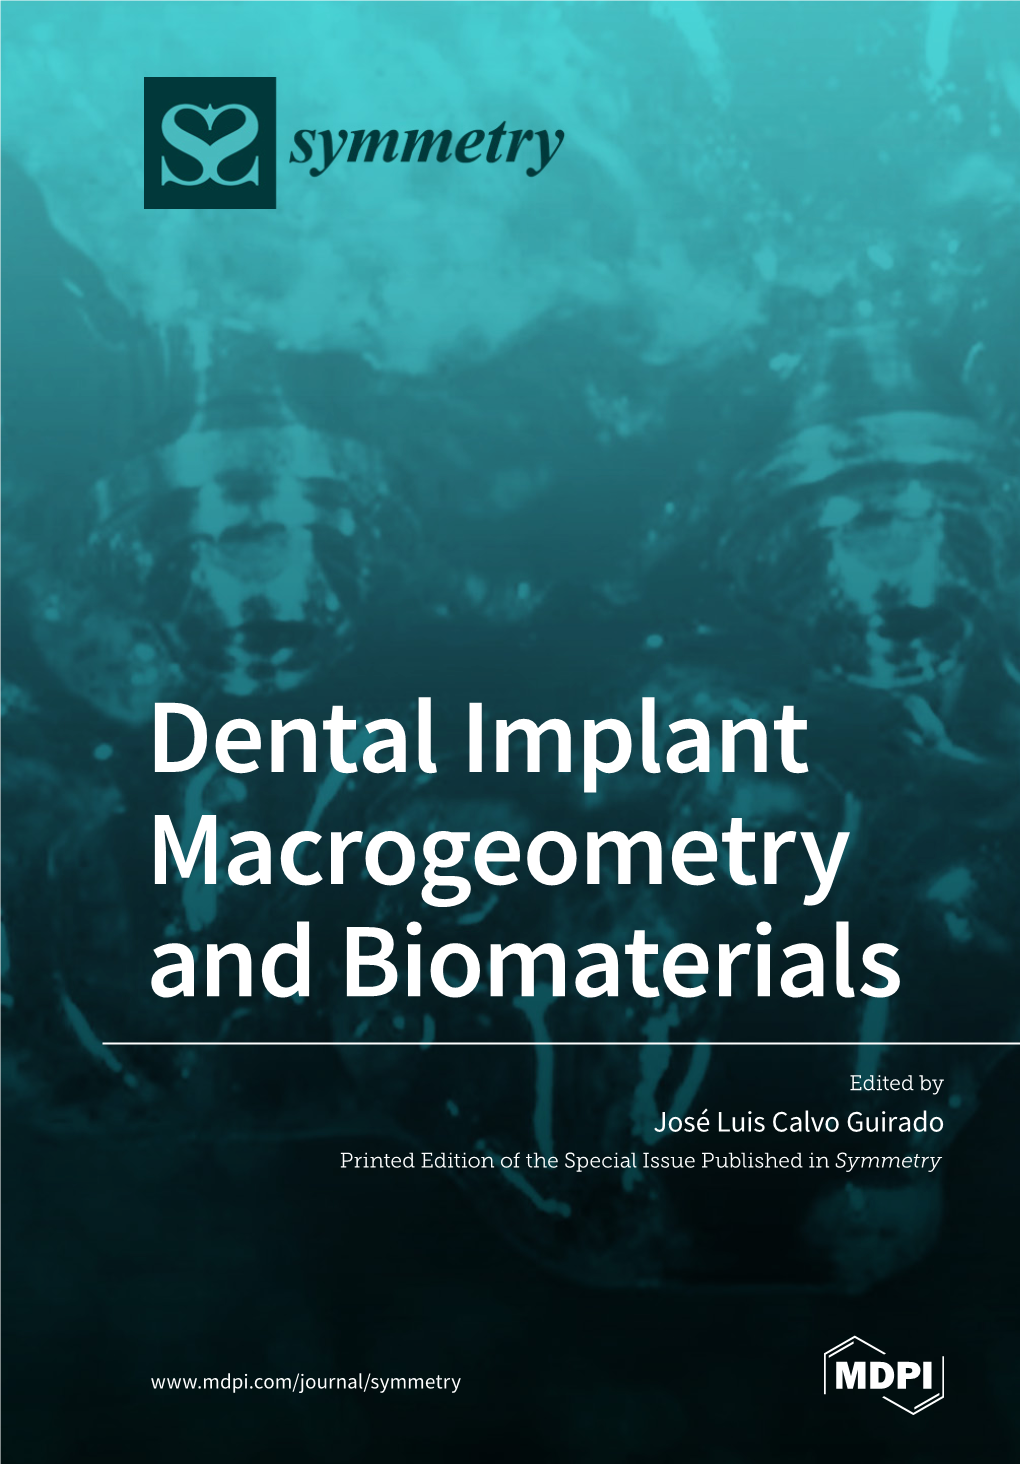 Dental Implant Macrogeometry and Biomaterials • José Luis Calvo Guirado Dental Implant Macrogeometry and Biomaterials